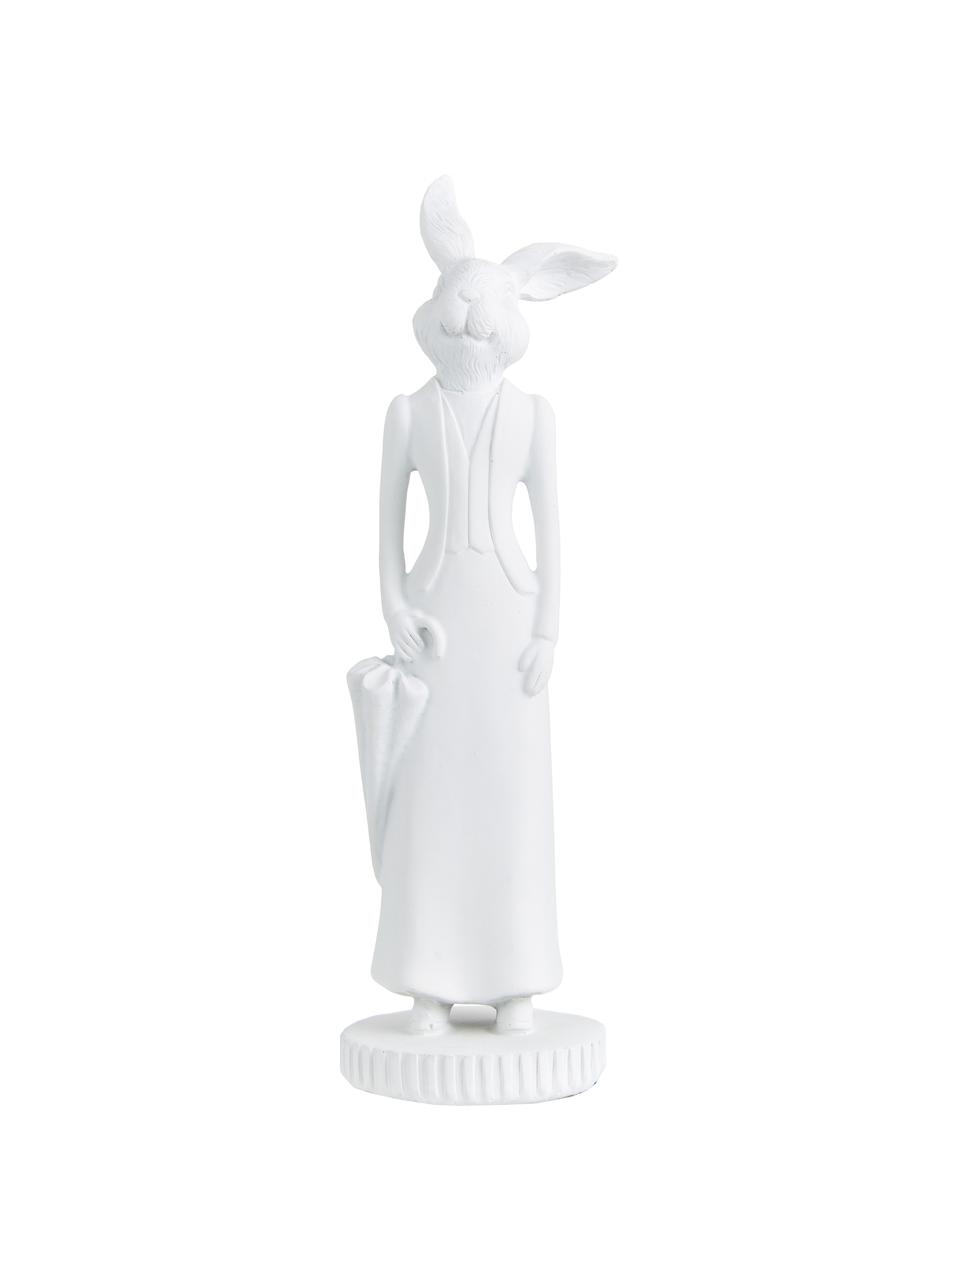 Handgefertigtes Deko-Objekt Lady, Kunststoff, Weiss, B 6 x H 19 cm